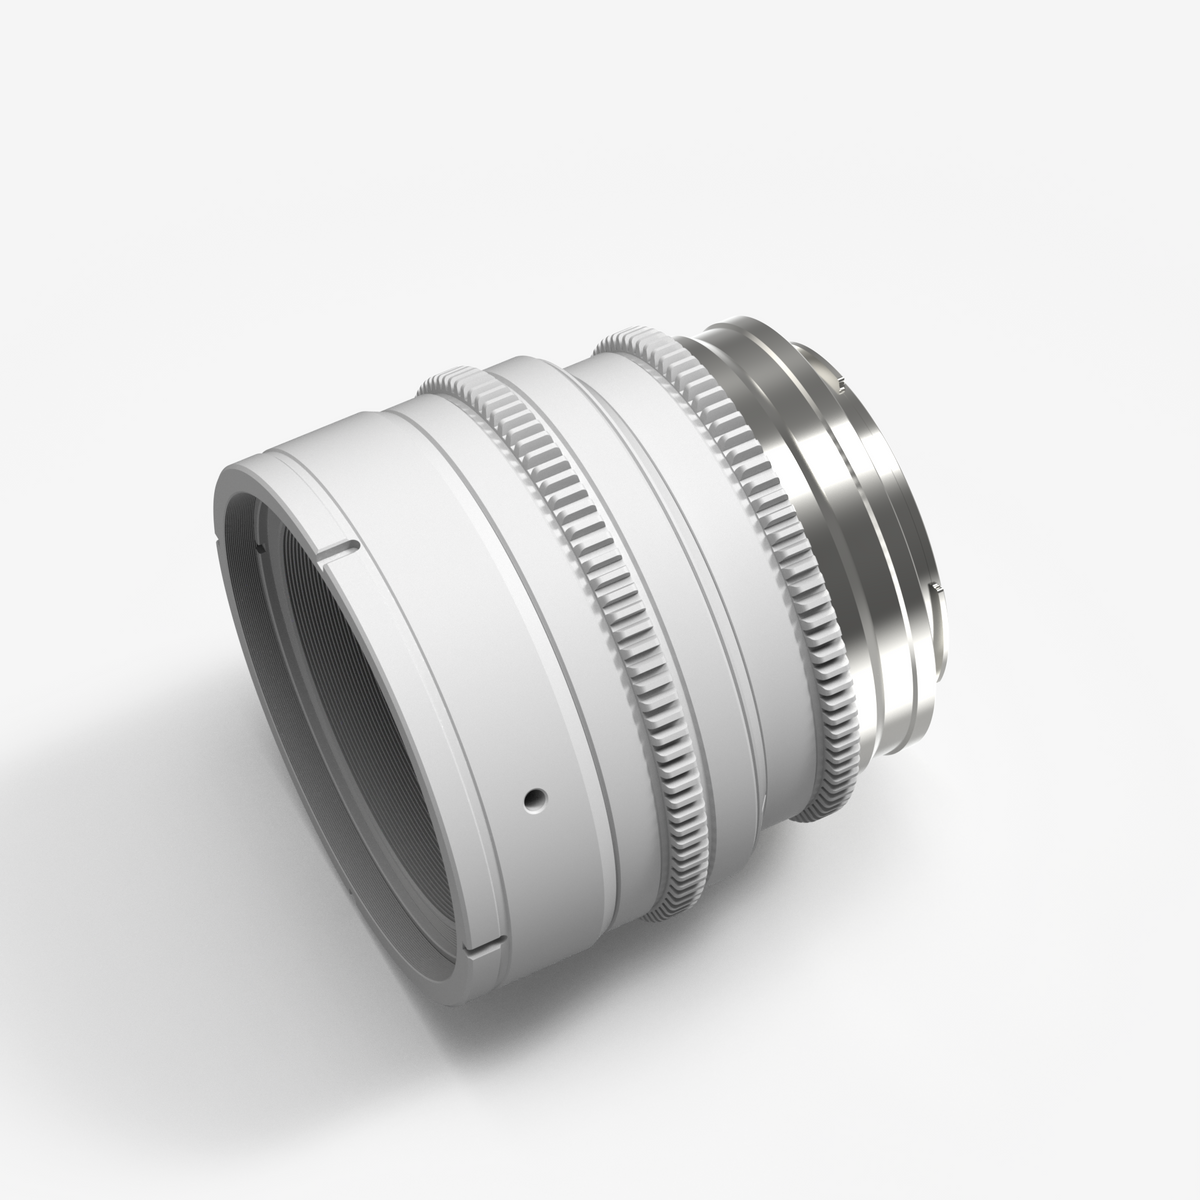 Dulens 58mm EF-Mount Kit for APO MINI Prime 58mm Lens